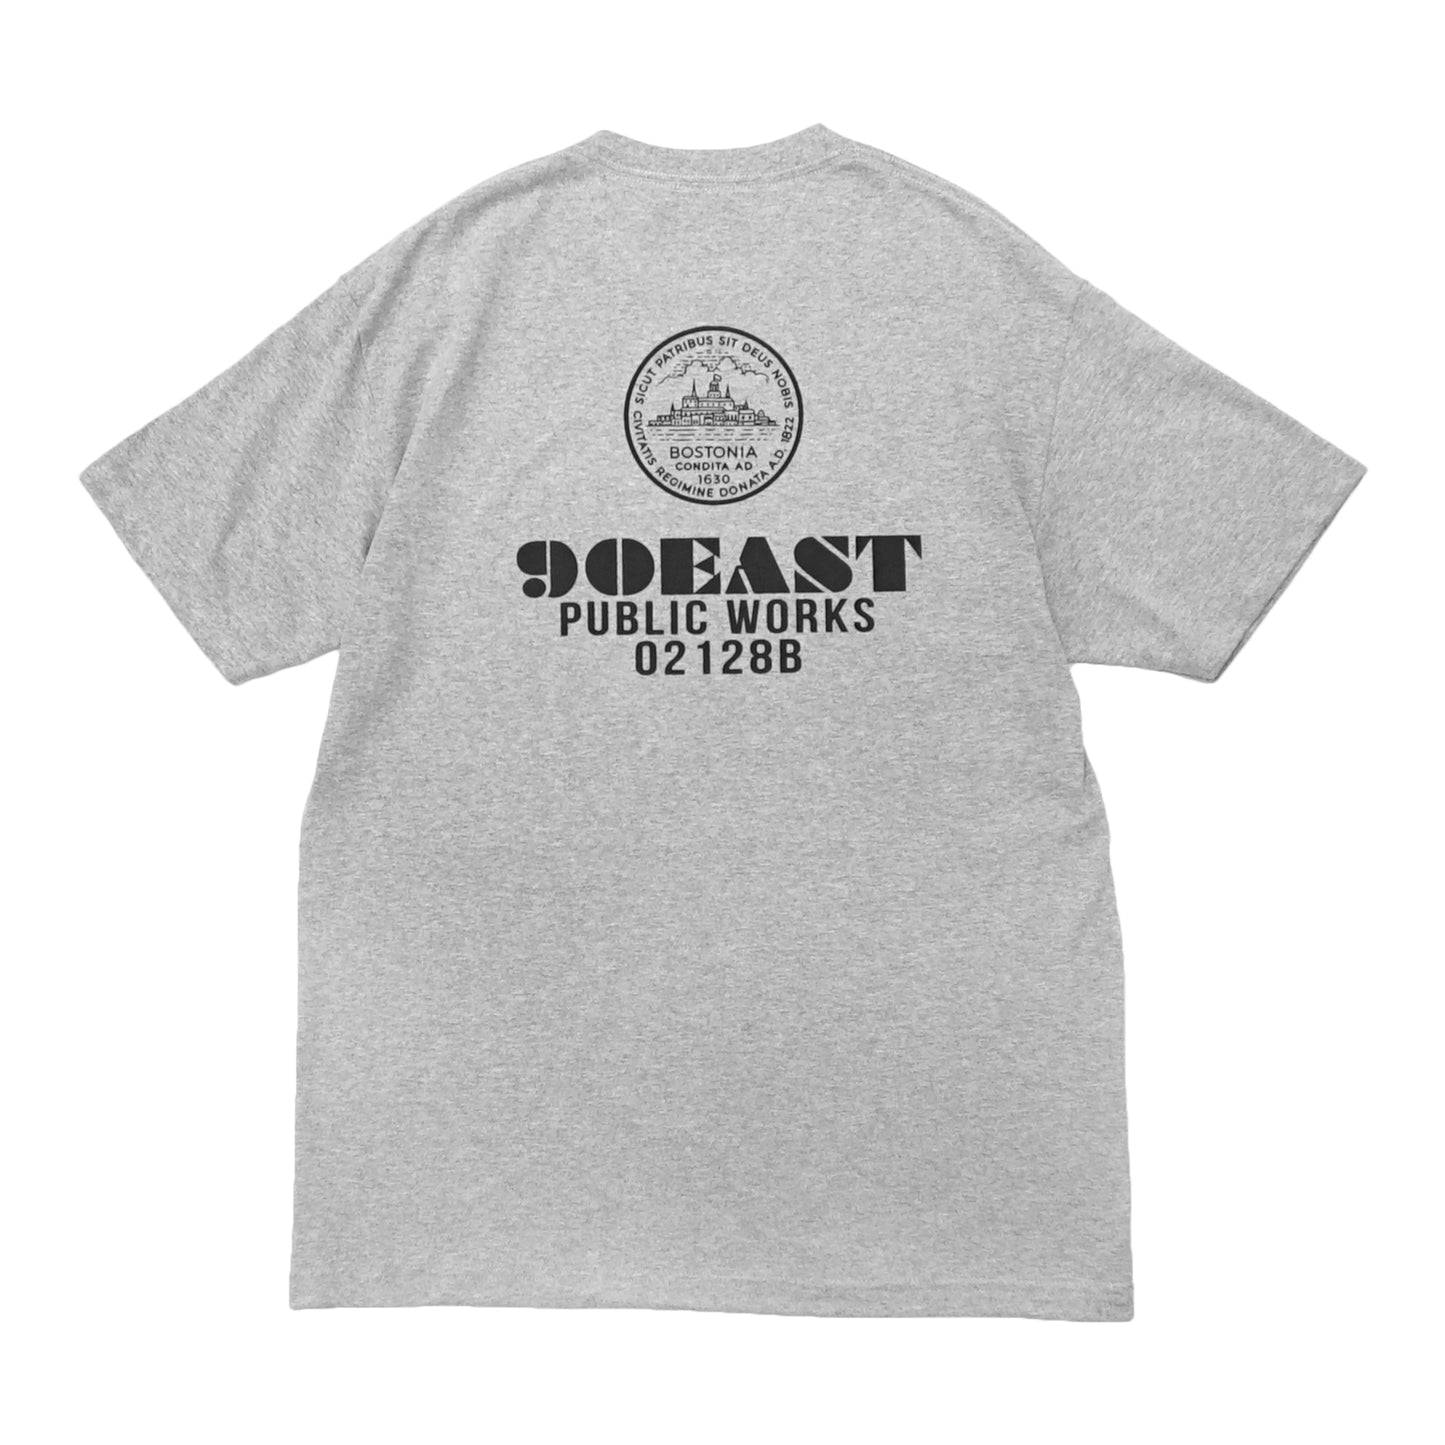 90EAST - Works T-Shirt/Heather Grey